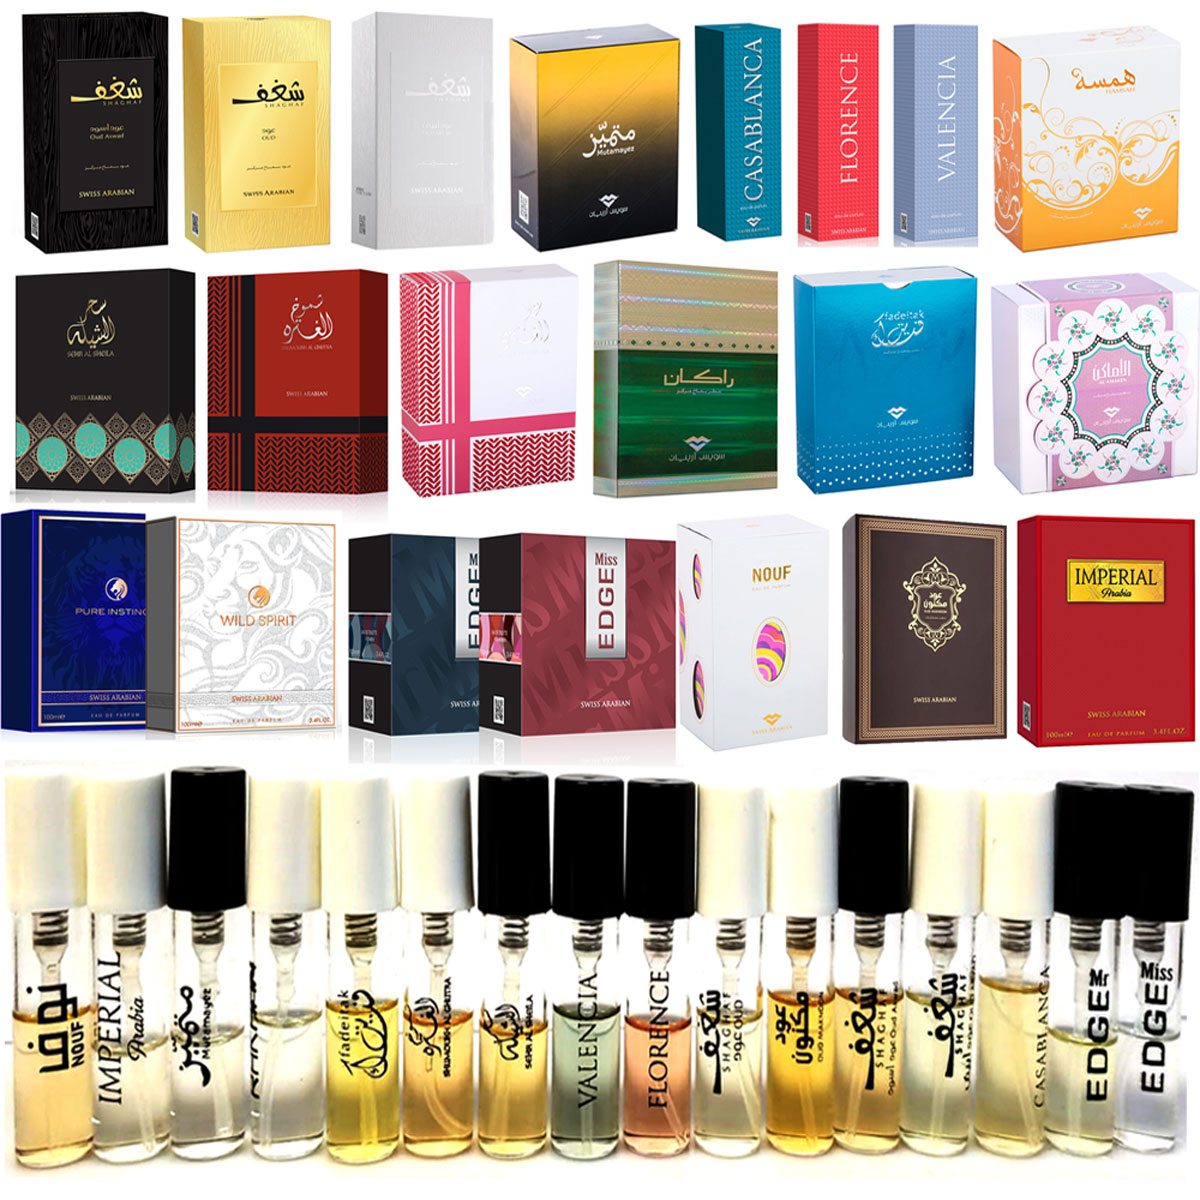 Swiss Arabian Perfume and Cologne Samples